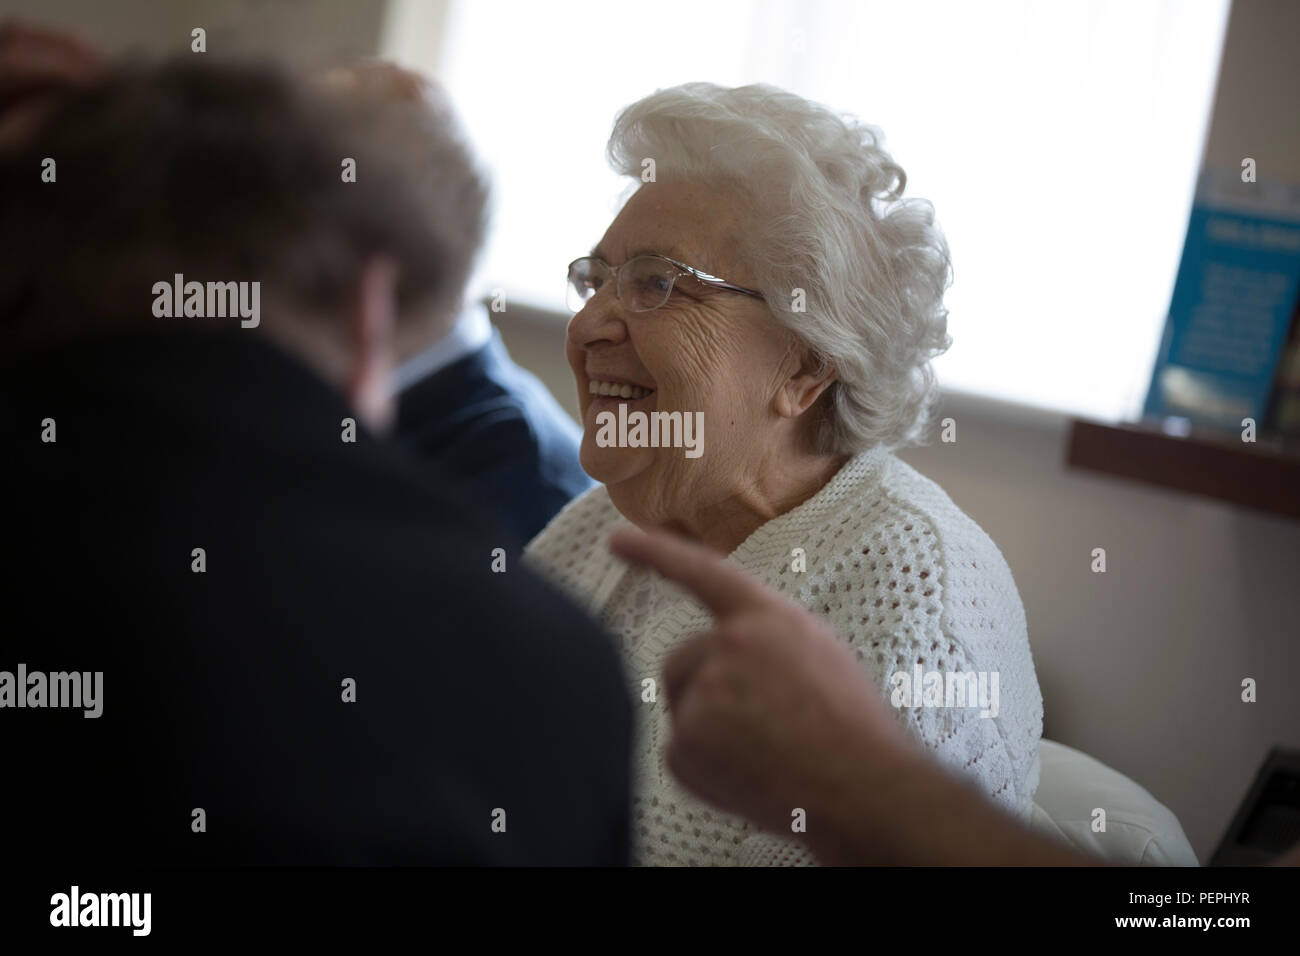 Older lady smiling, laughing and enjoying herself Stock Photo